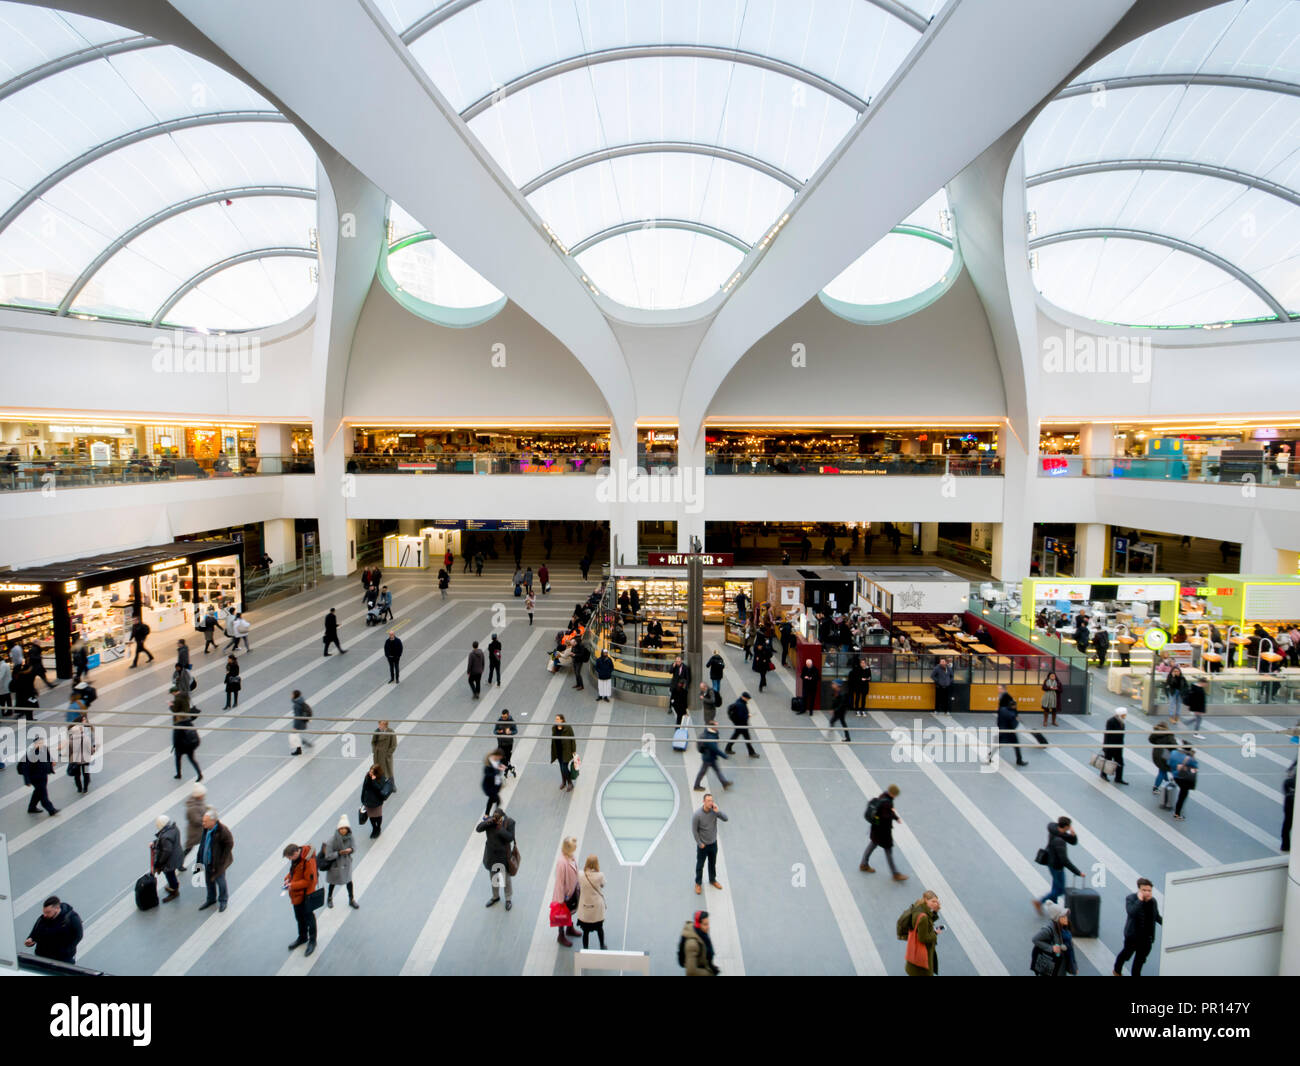 Grand Central shopping mall interior, Birmingham, England, United Kingdom, Europe Stock Photo